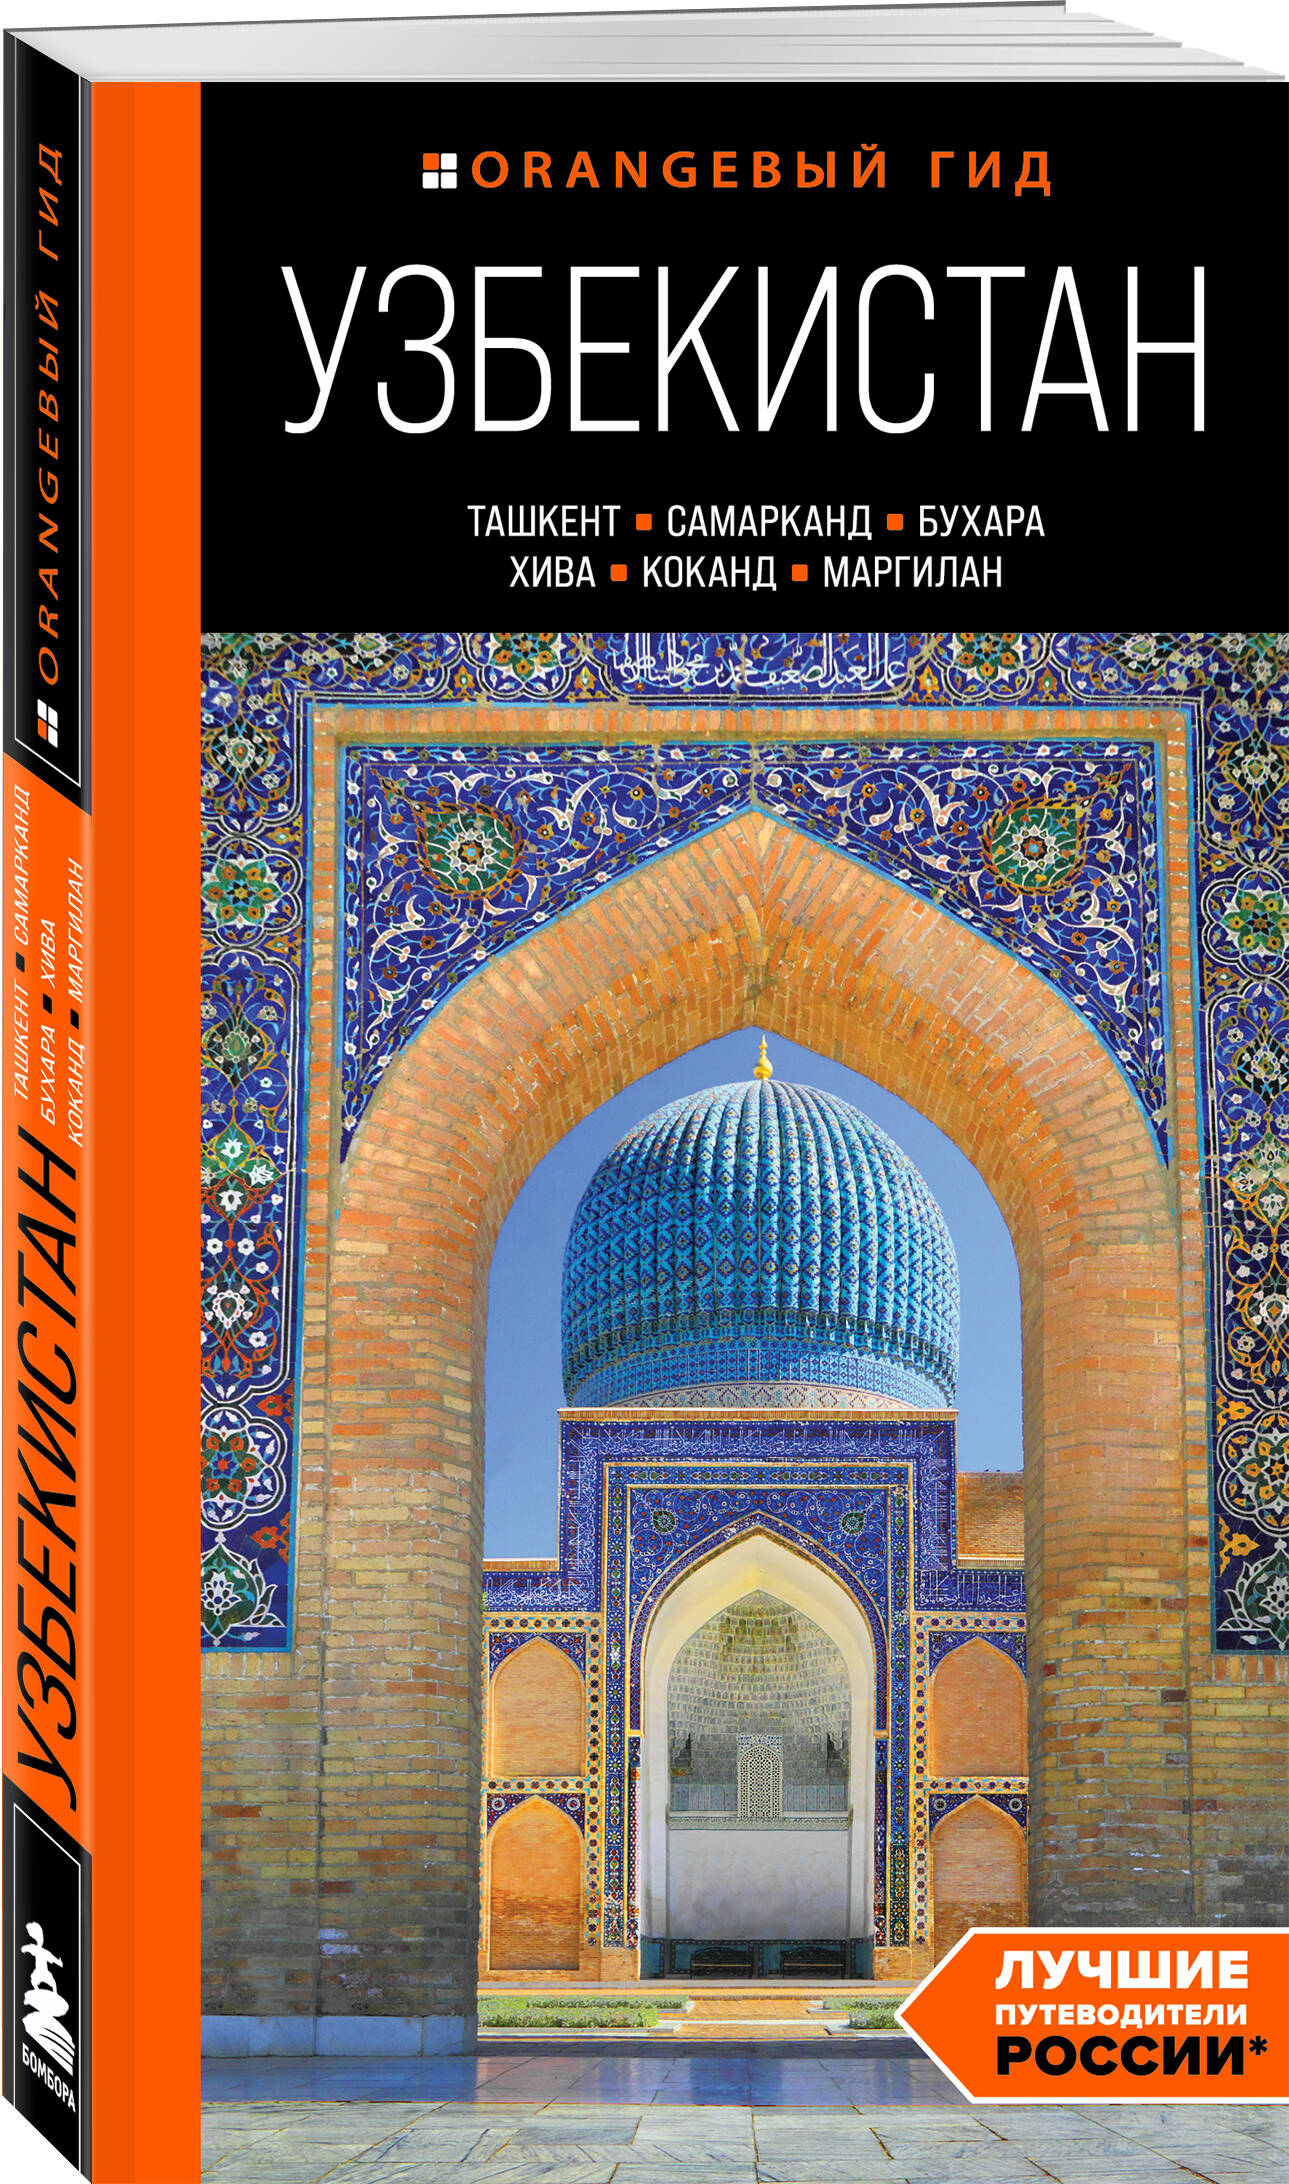 Узбекистан: Ташкент, Самарканд, Бухара, Хива, Коканд, Маргилан – путеводитель